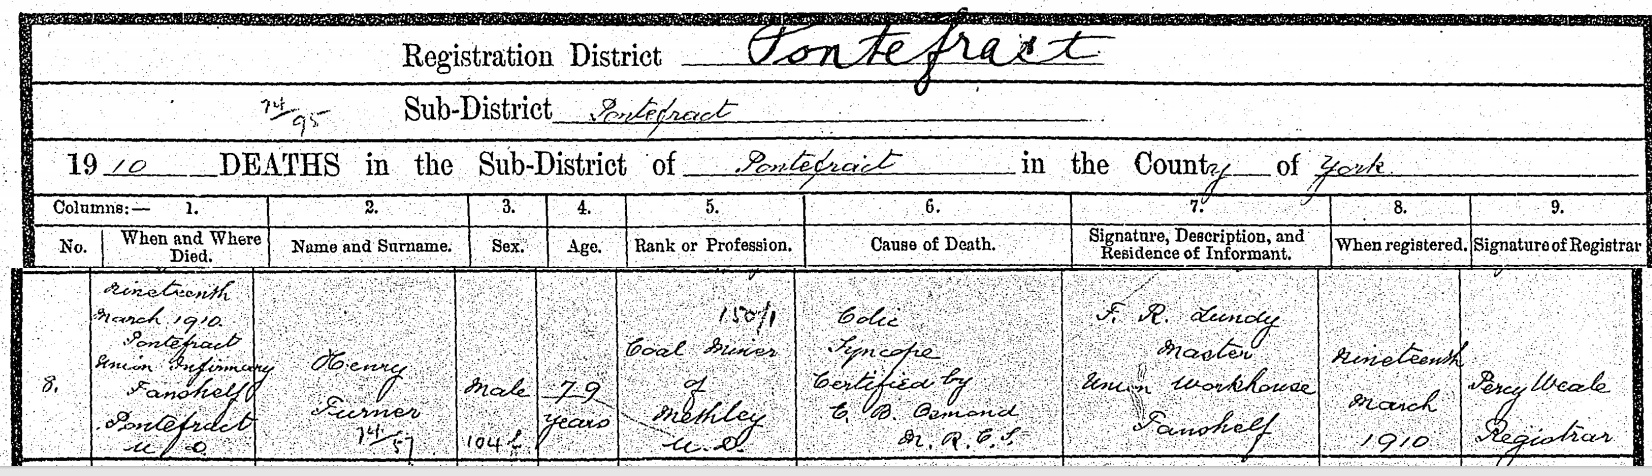 Death Certificate  - Henry Turner - 1910